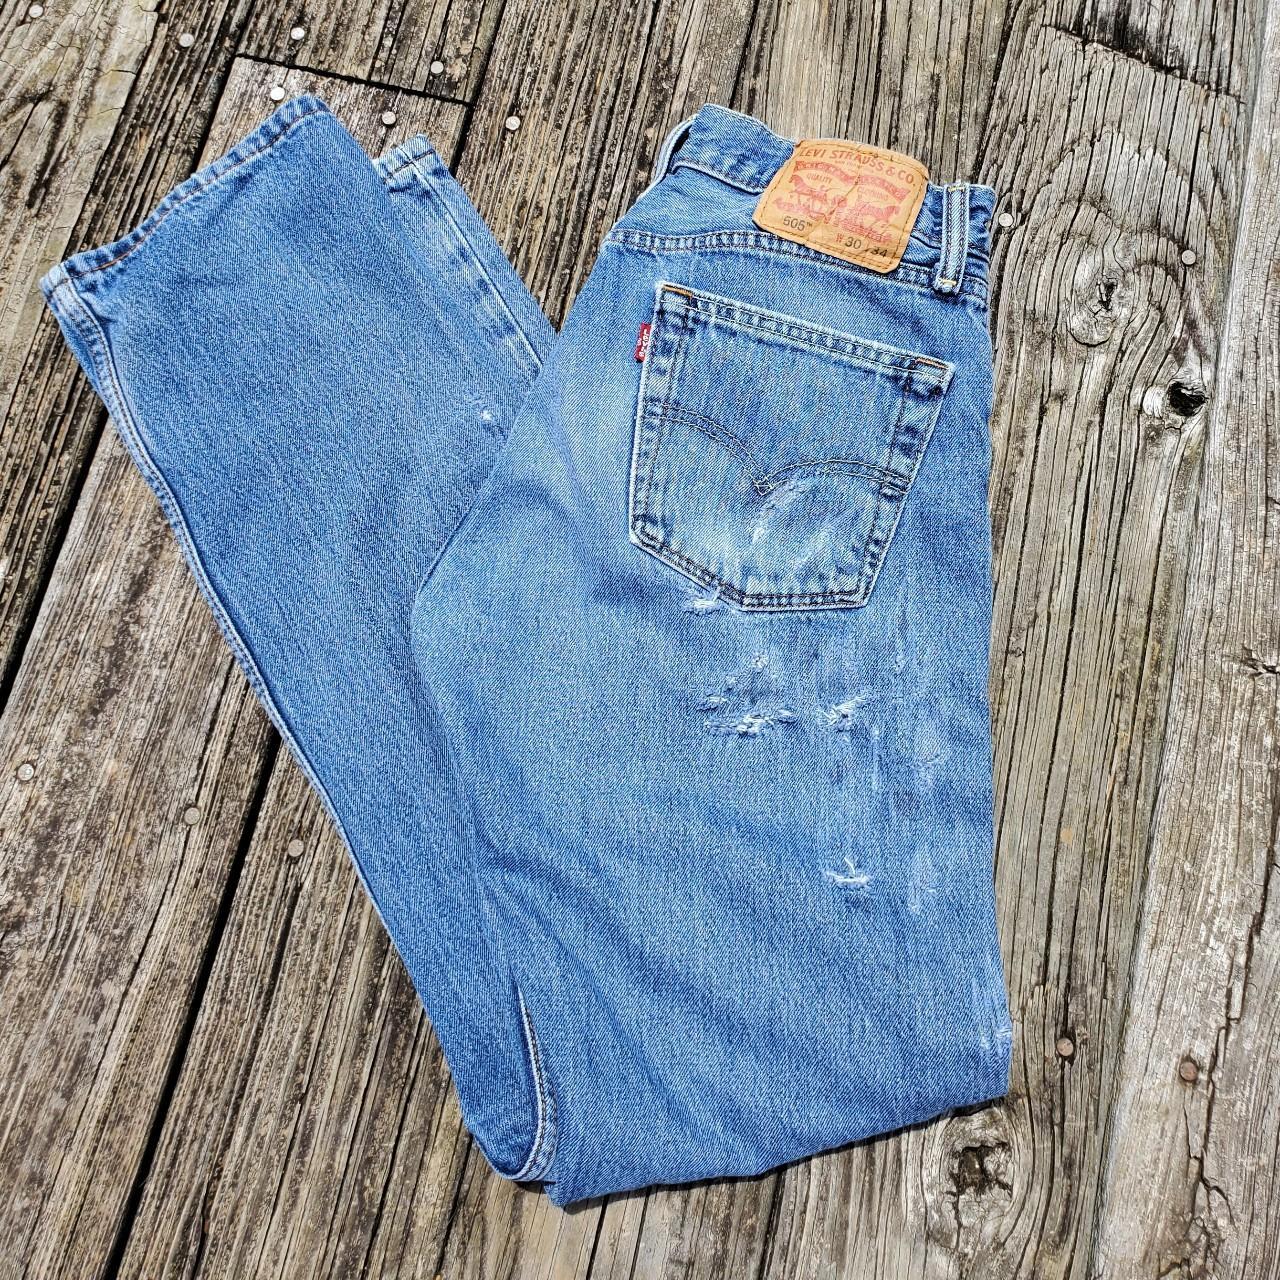 Urban Outfitters Renewal Vintage Levis Jeans 505... - Depop